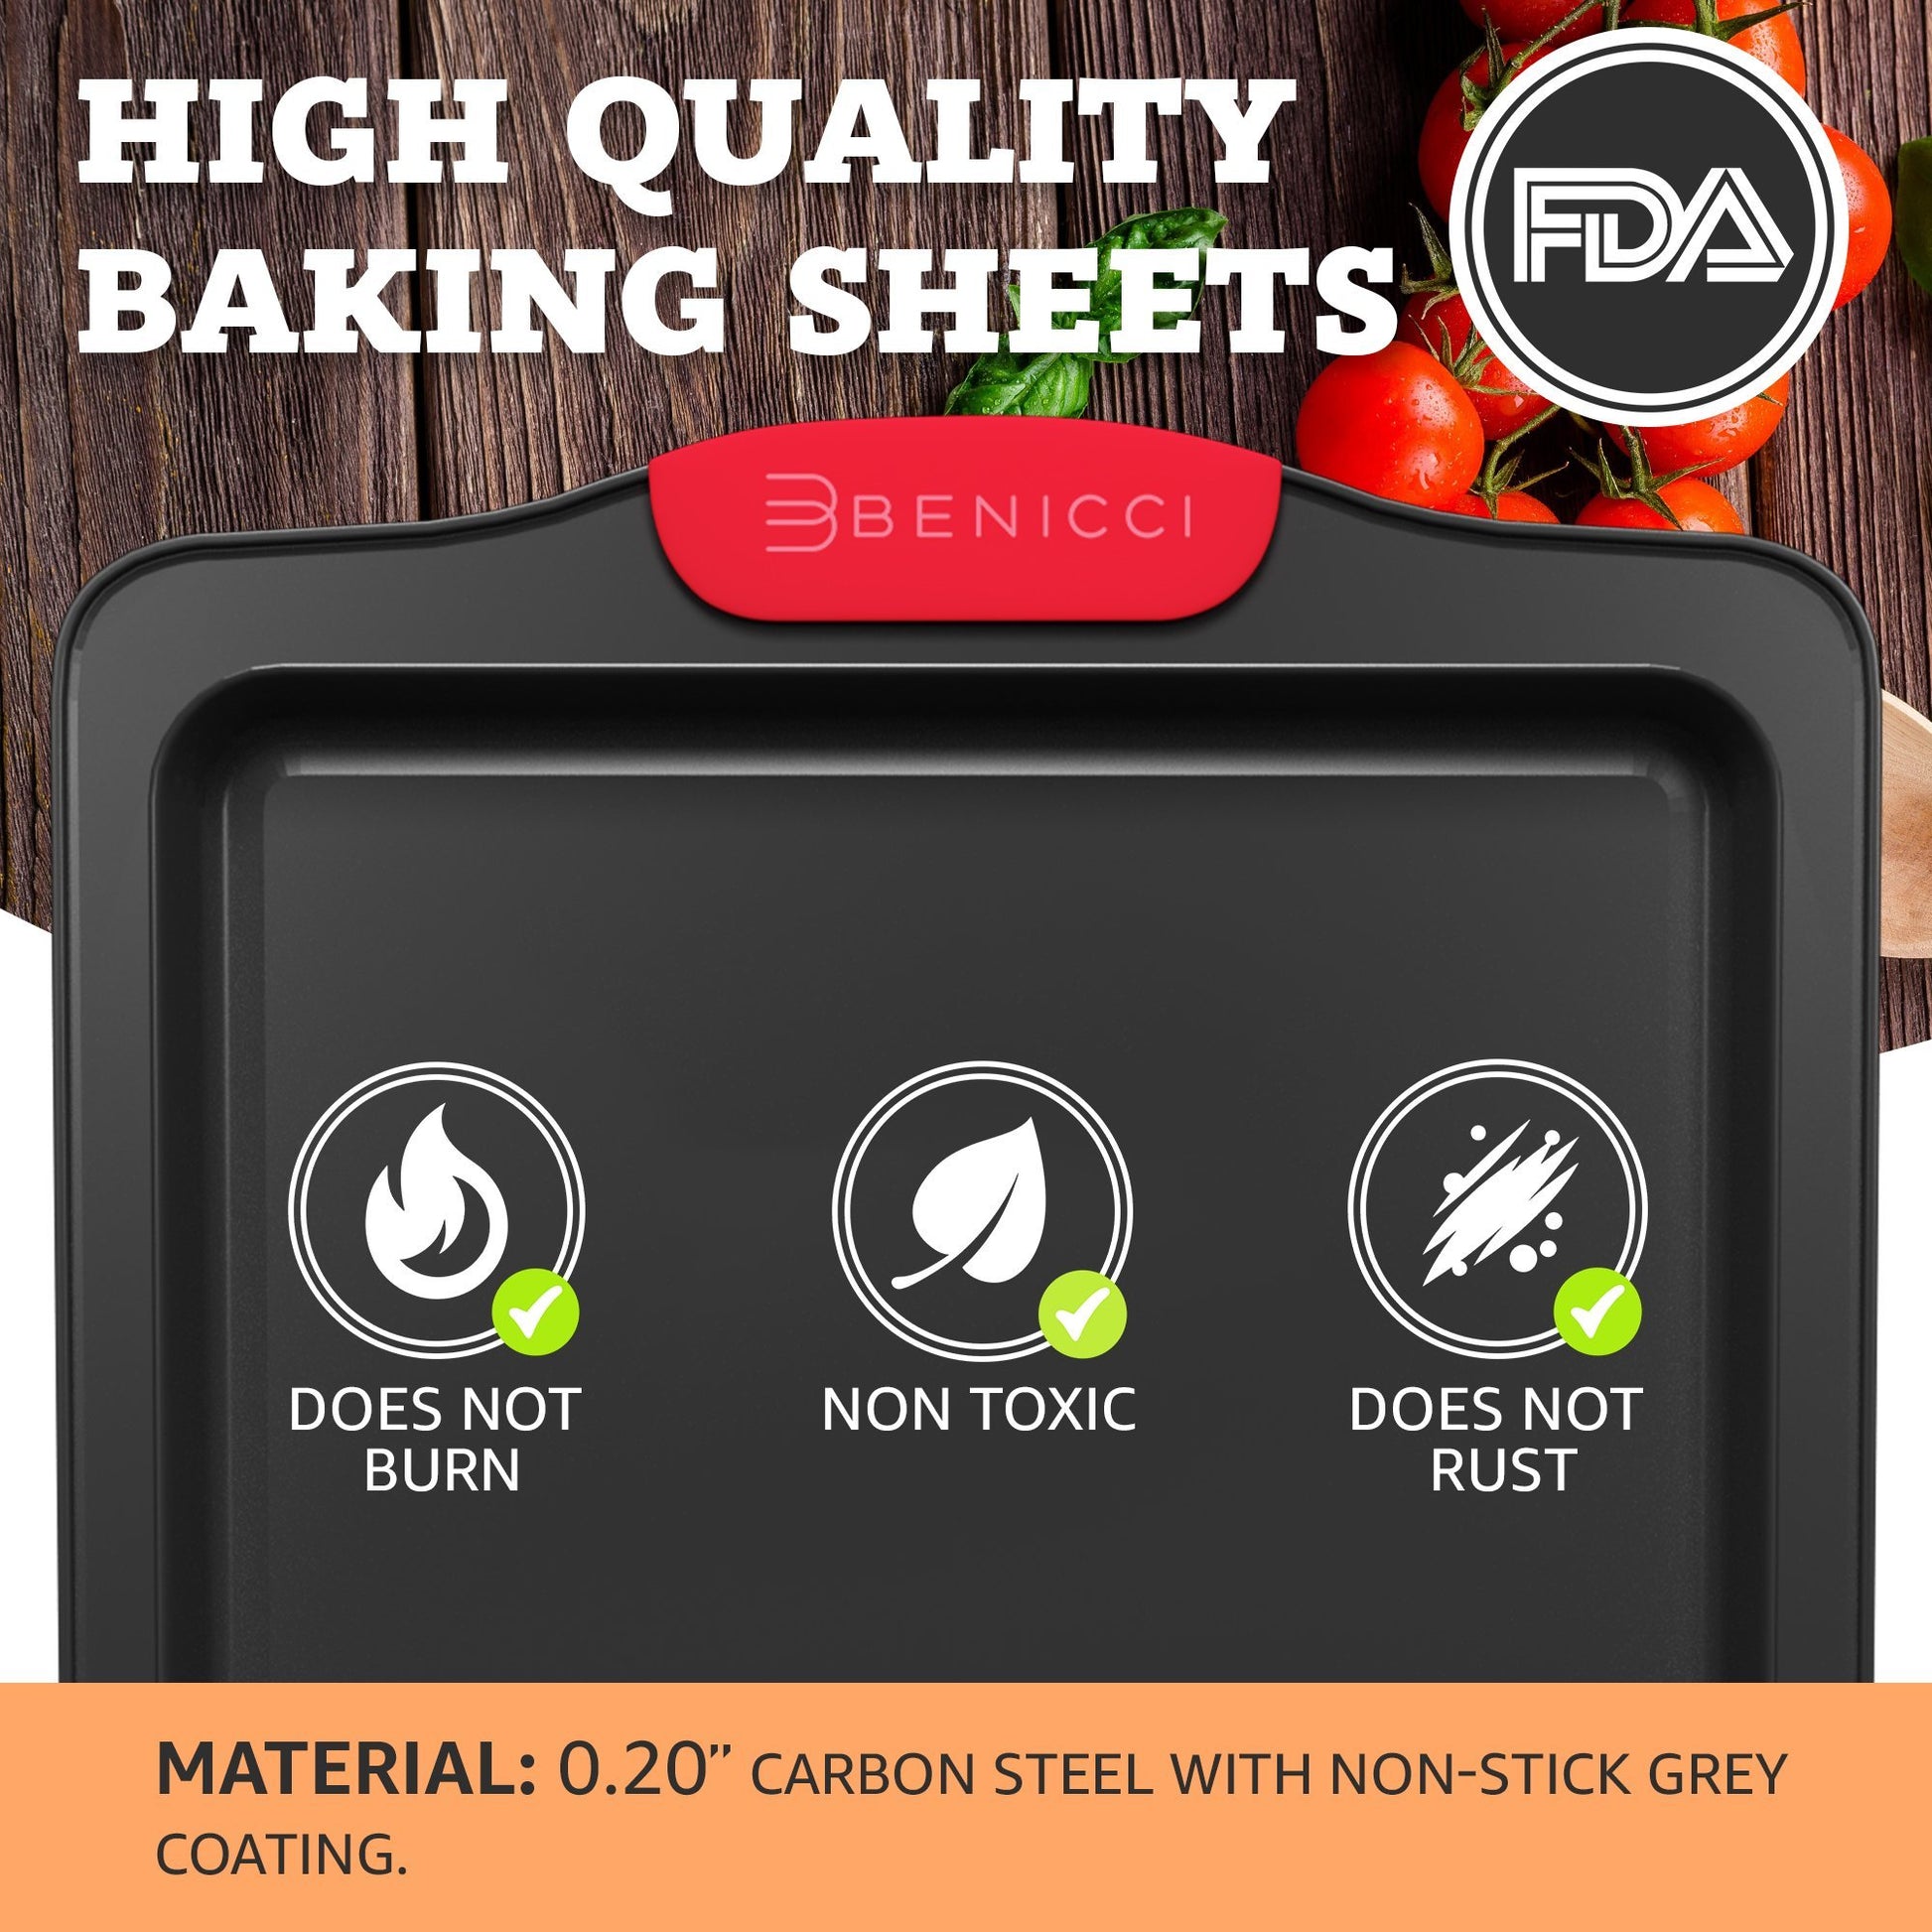 Boxiki Kitchen Nonstick Baking Sheet Pan 100% Non Toxic Rimmed Stainless 3 Set